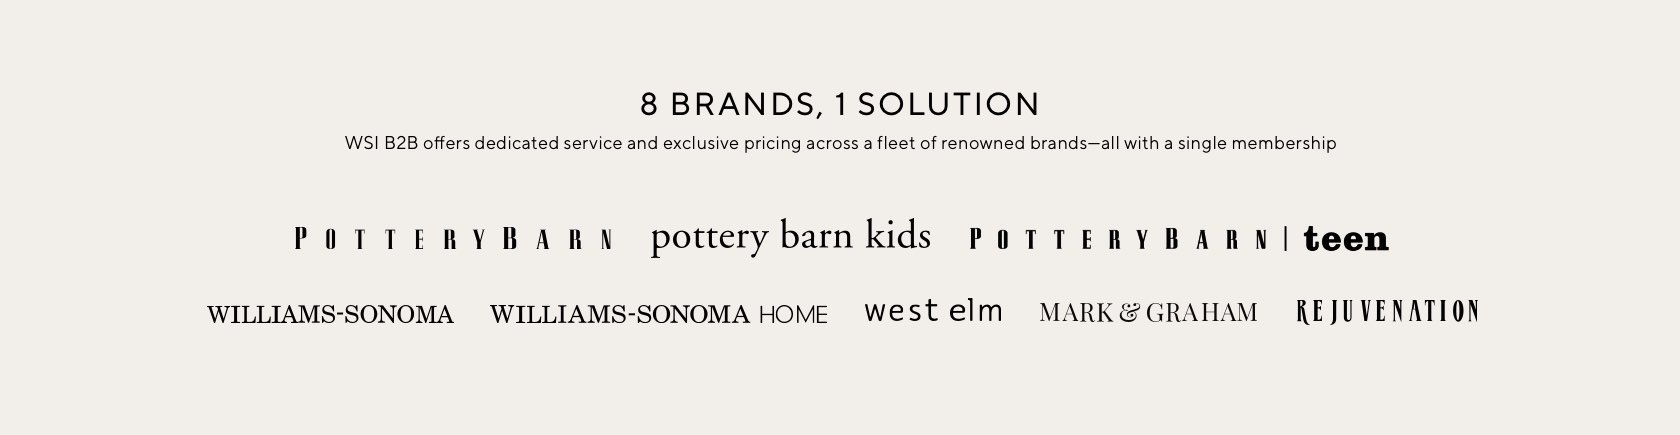 8 Brands, 1 Solution